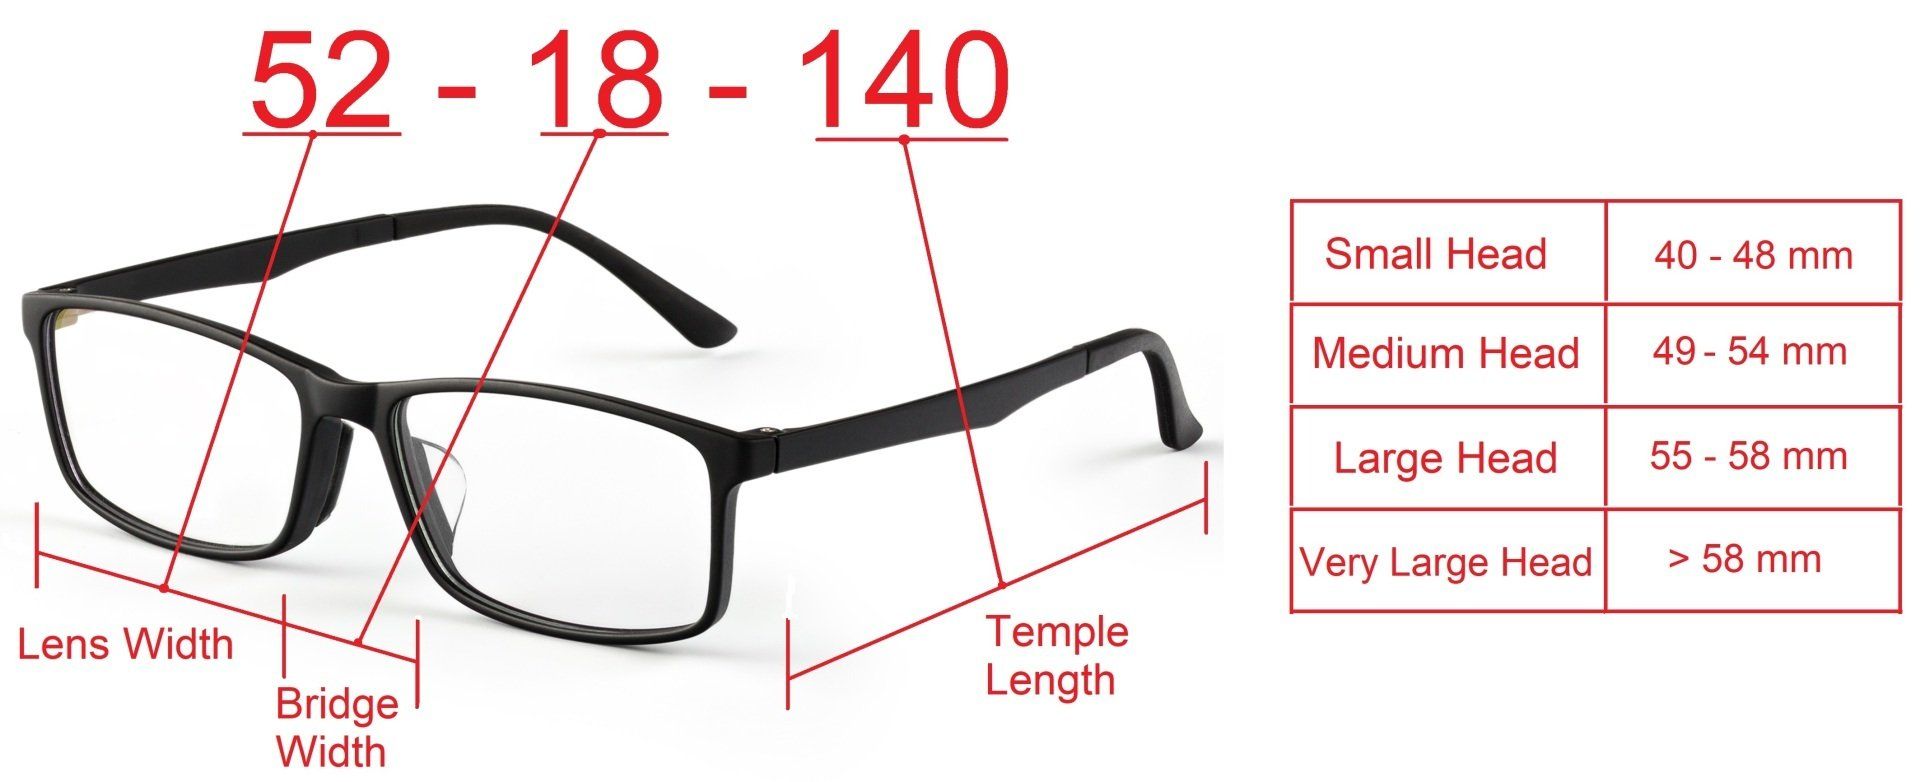 Eyeglass frame measurements